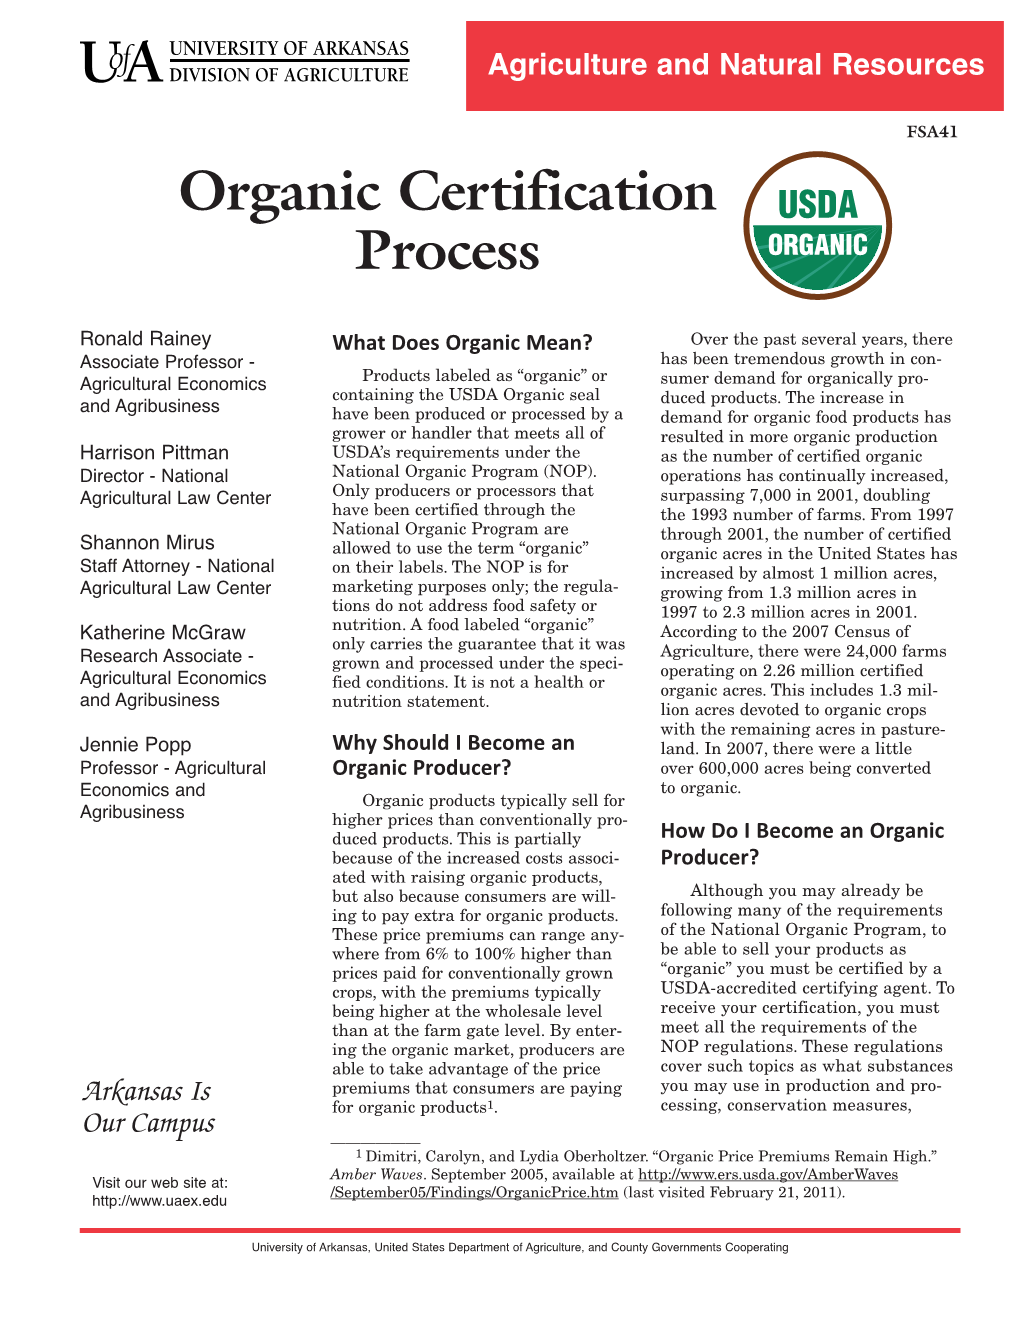 Organic Certification Process